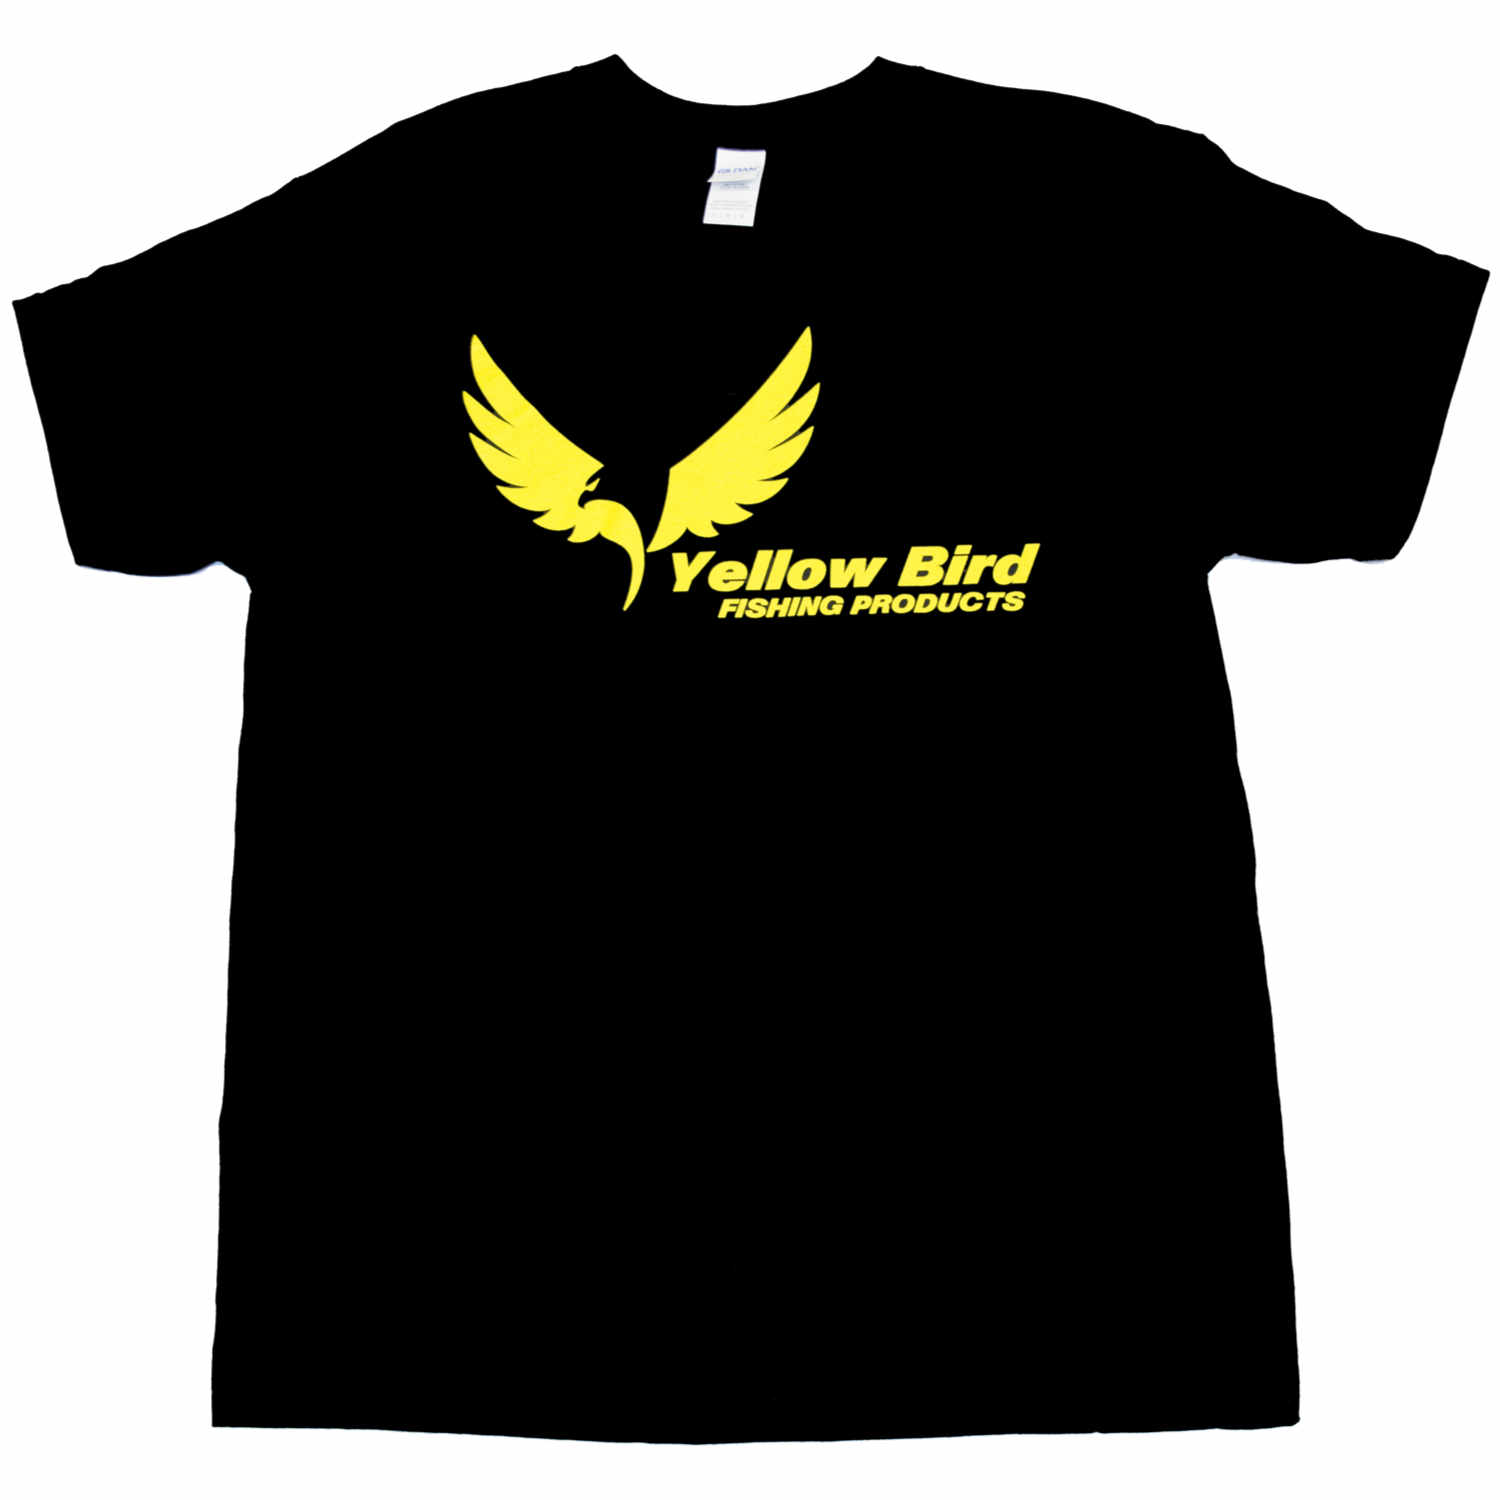 Yellow Bird Fishing Products T-Shirt - Yellow Bird Fishing Products